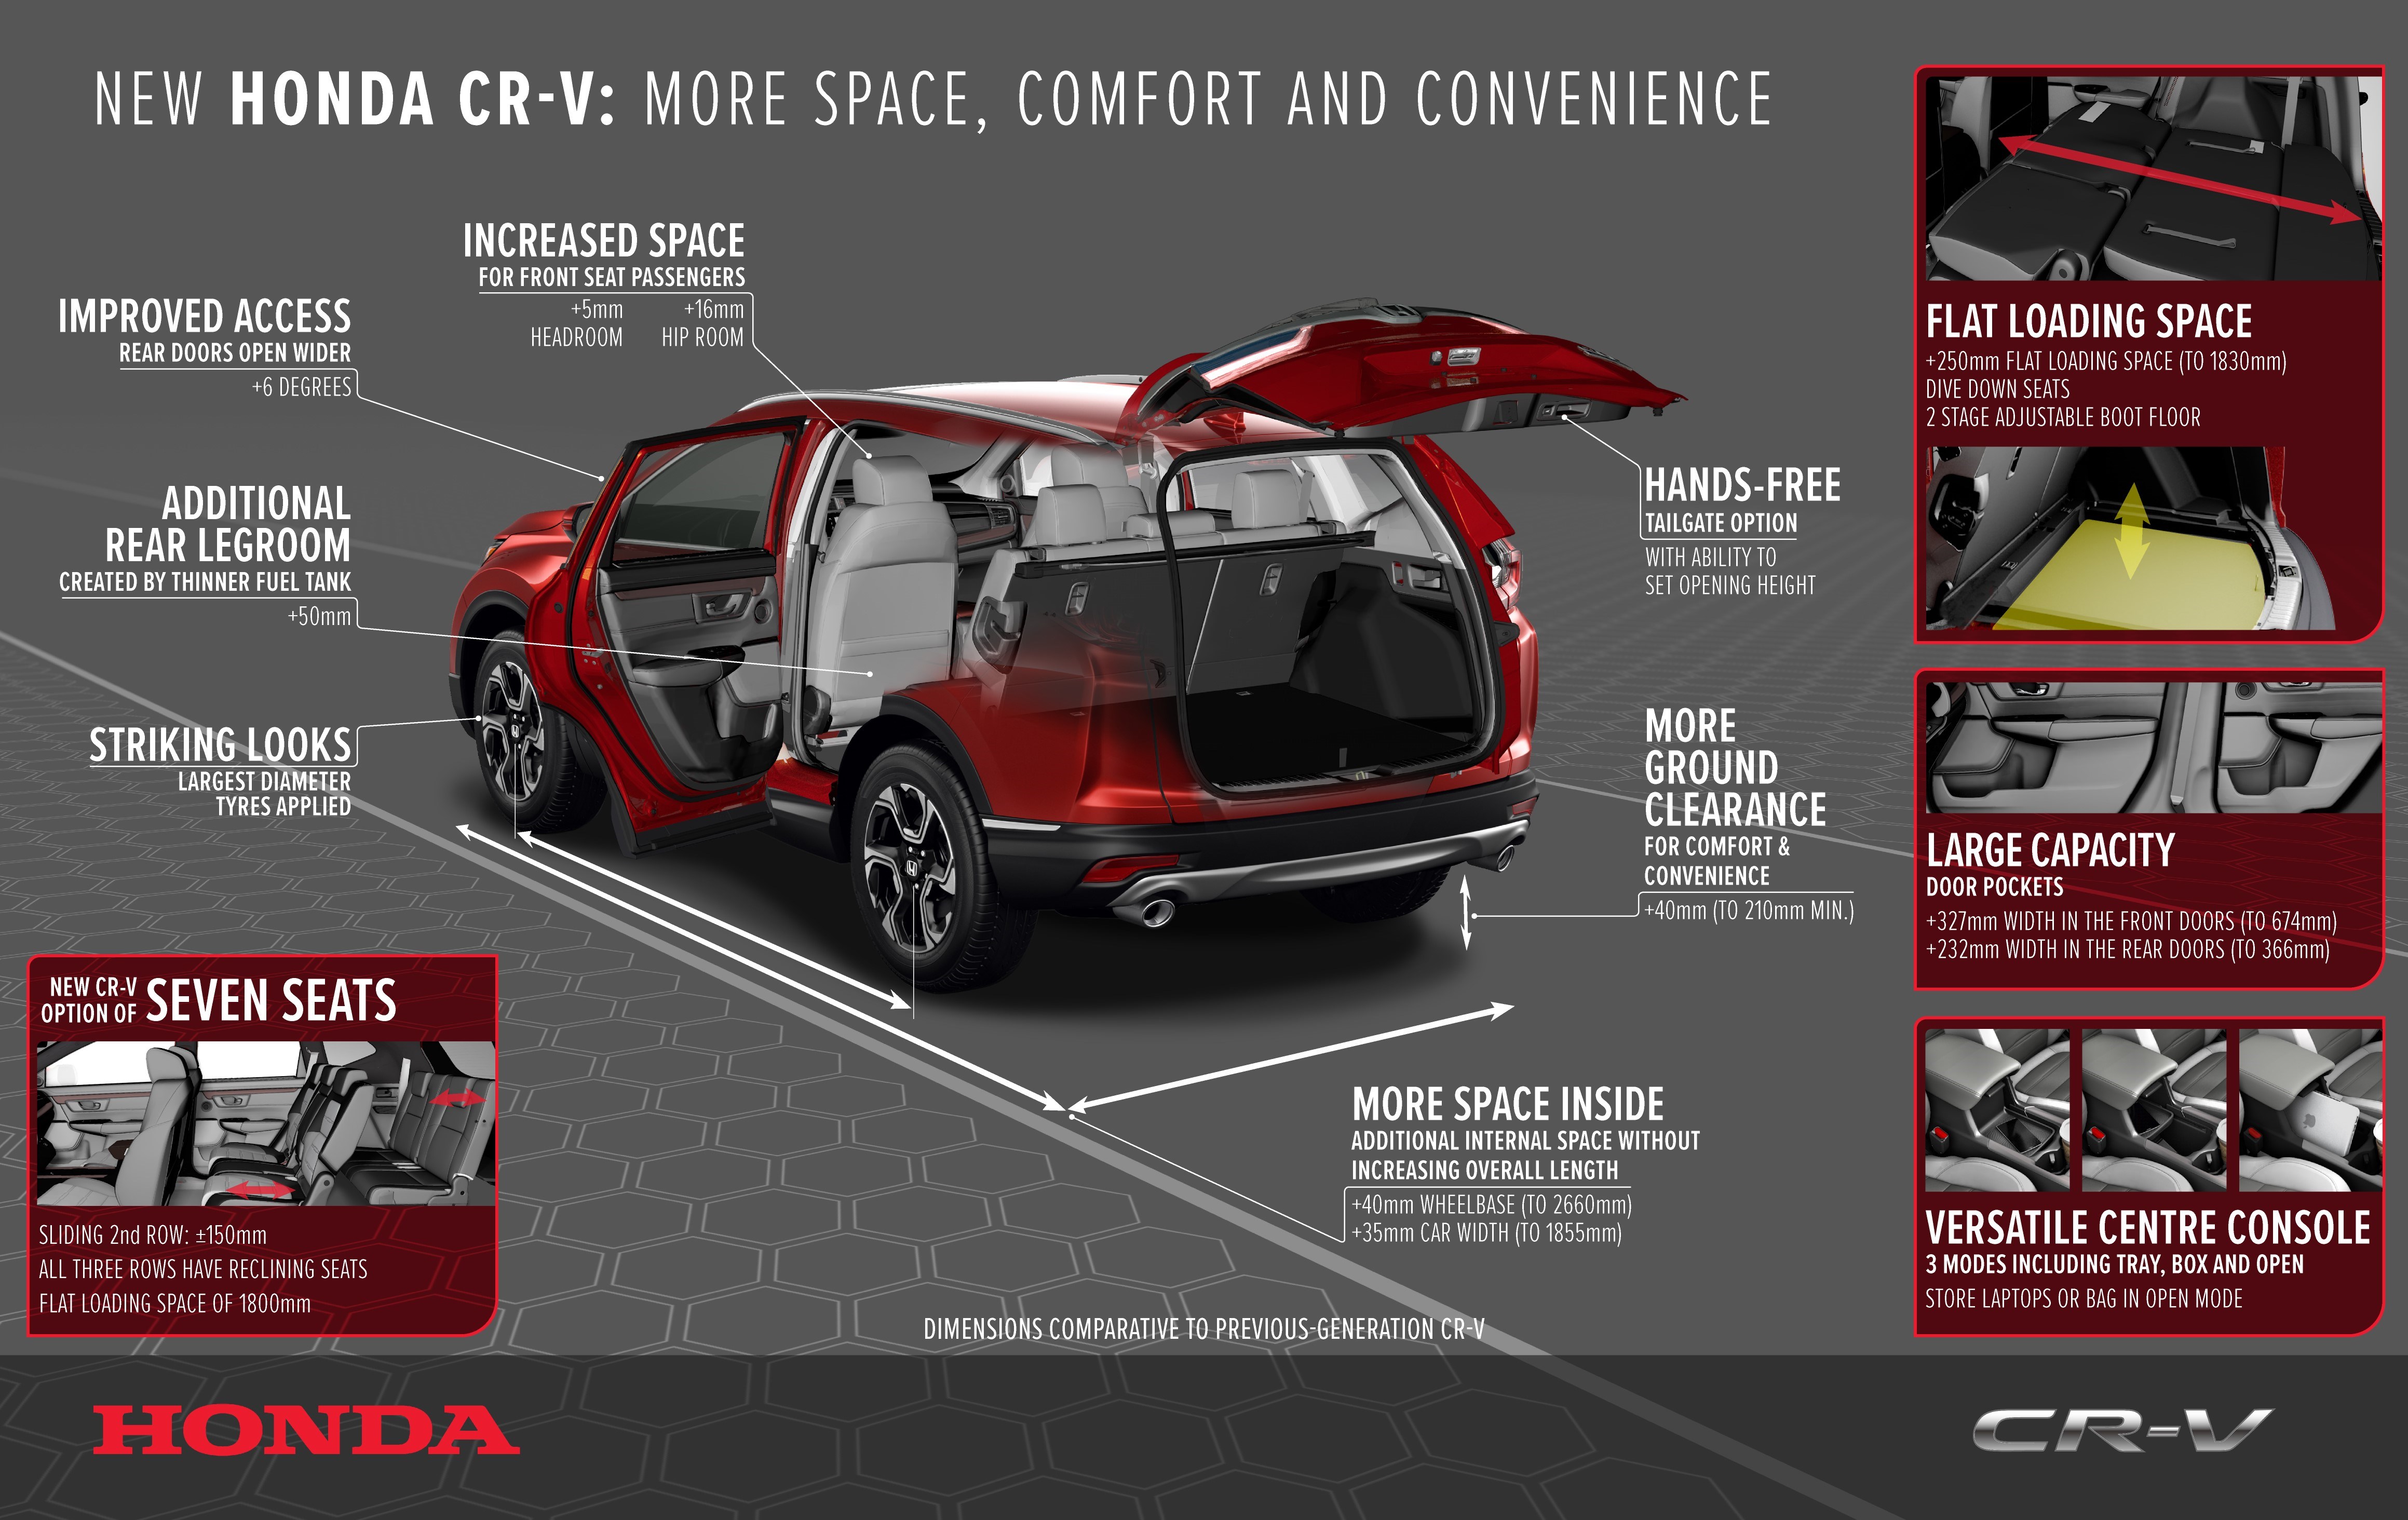 New Honda CR-V 2019 - Features